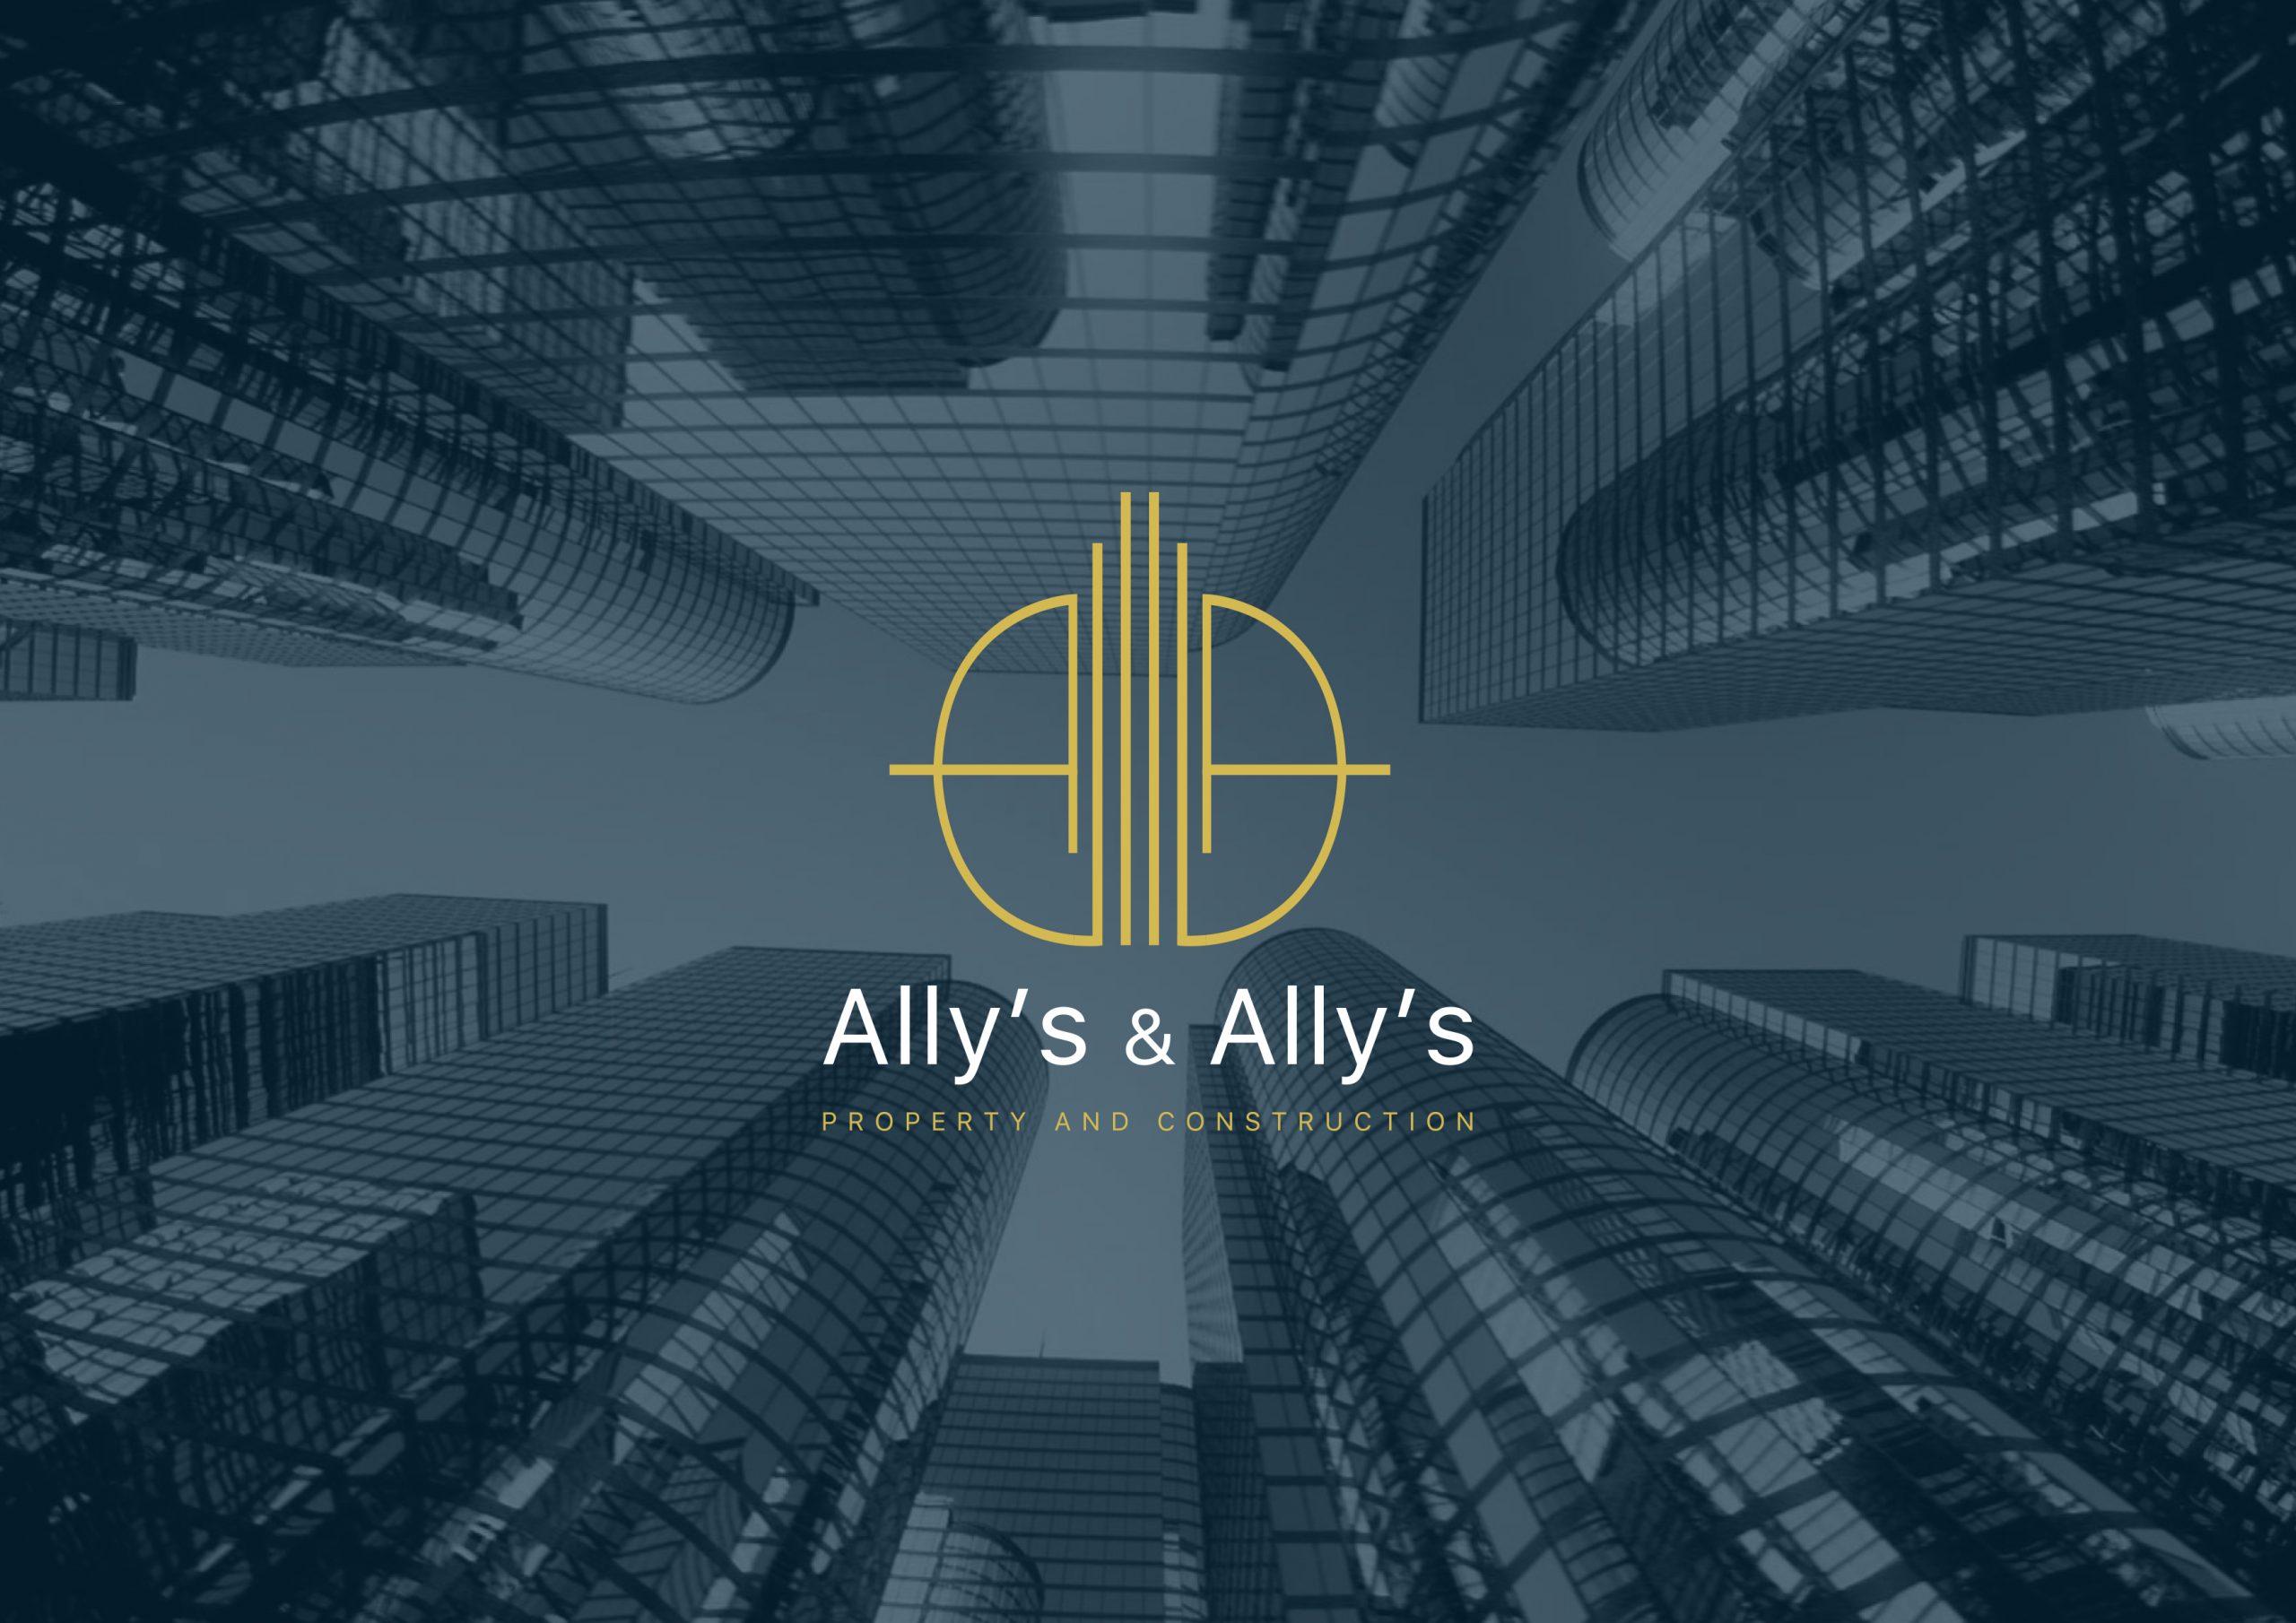 Ally’s & Ally’s